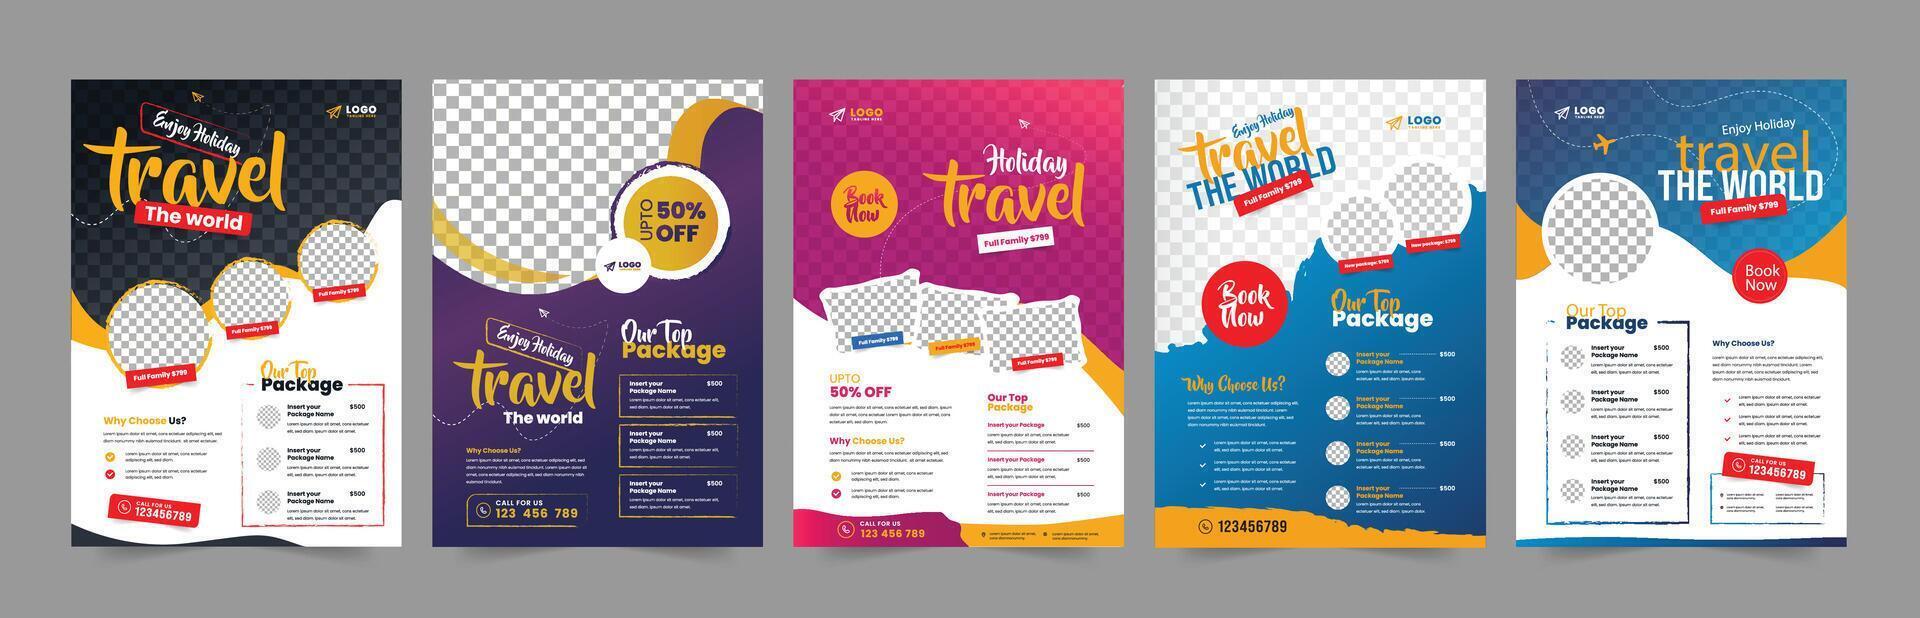 Travel Flyer Holiday Travel Flyer Bundle Set vector